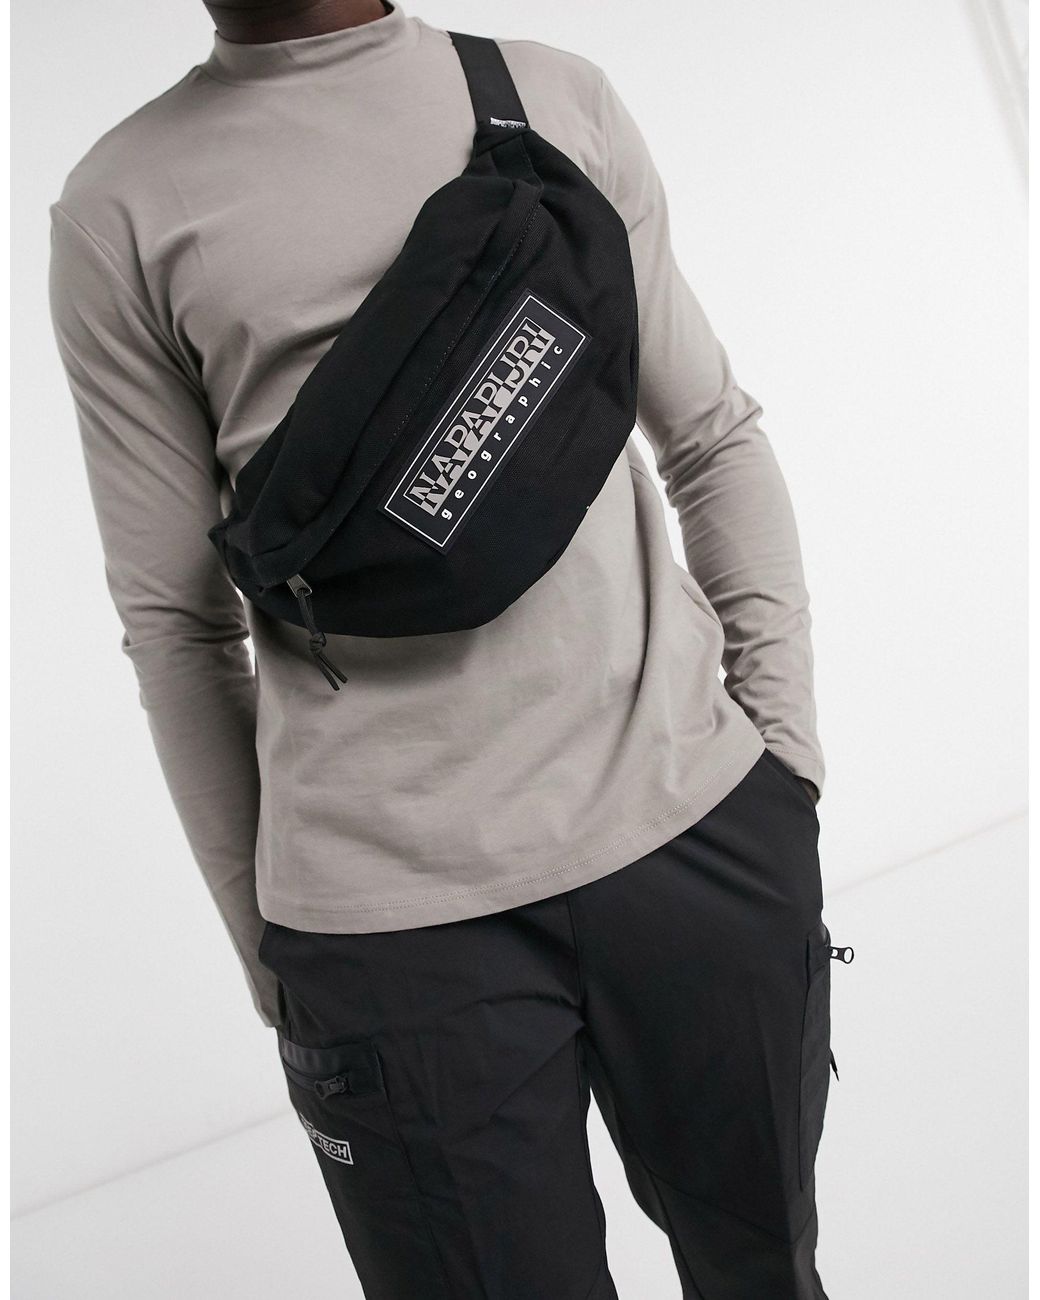 Napapijri Haset 2 Bum Bag in Black for Men | Lyst Canada